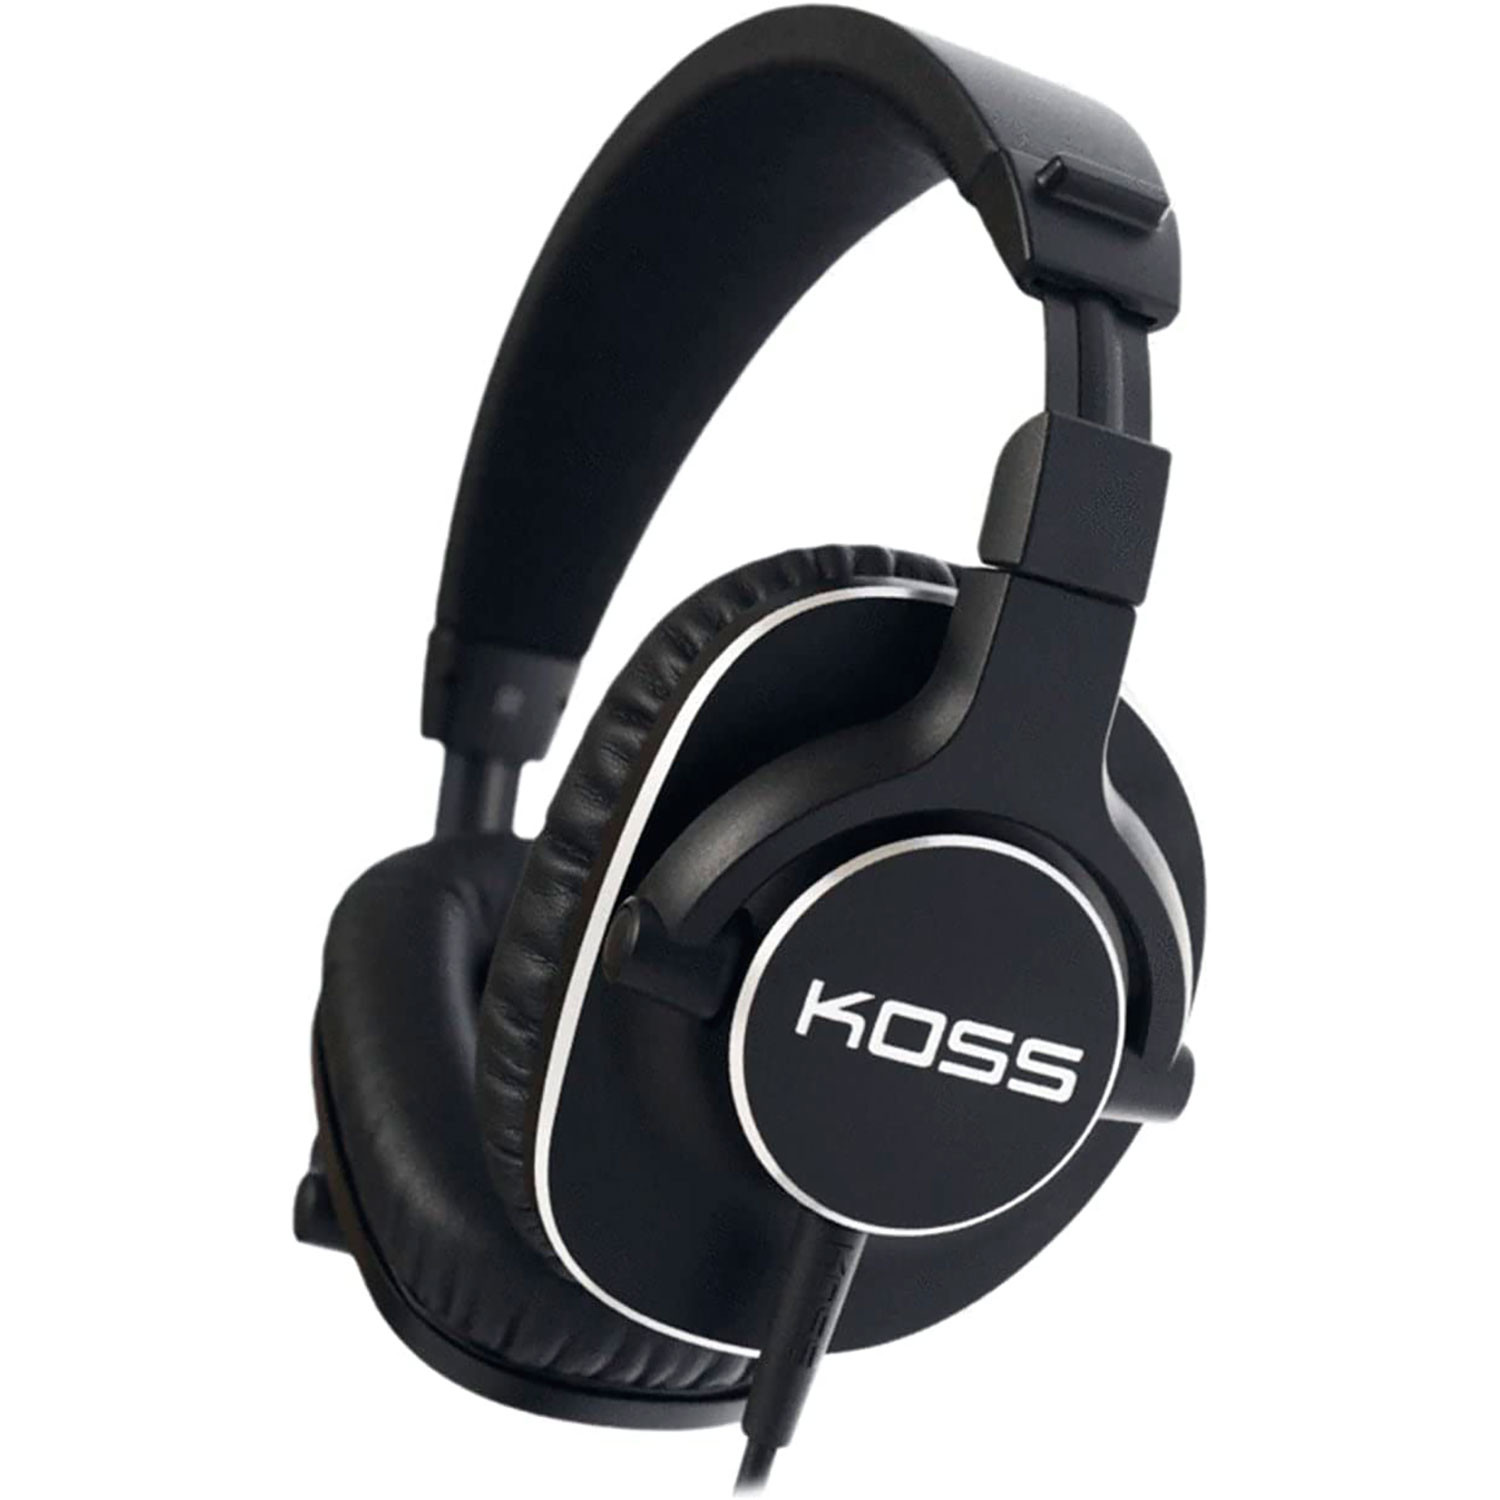 Koss PRO4S Studio Auriculares con Cable, Cascos de Diadema Cerrados,  Headphones Over Ear, Ajustables, Plegables, para Música en Casa o en  Estudio de Sonido Profesional, Calidad de Graves, Jack de 3,5 mm